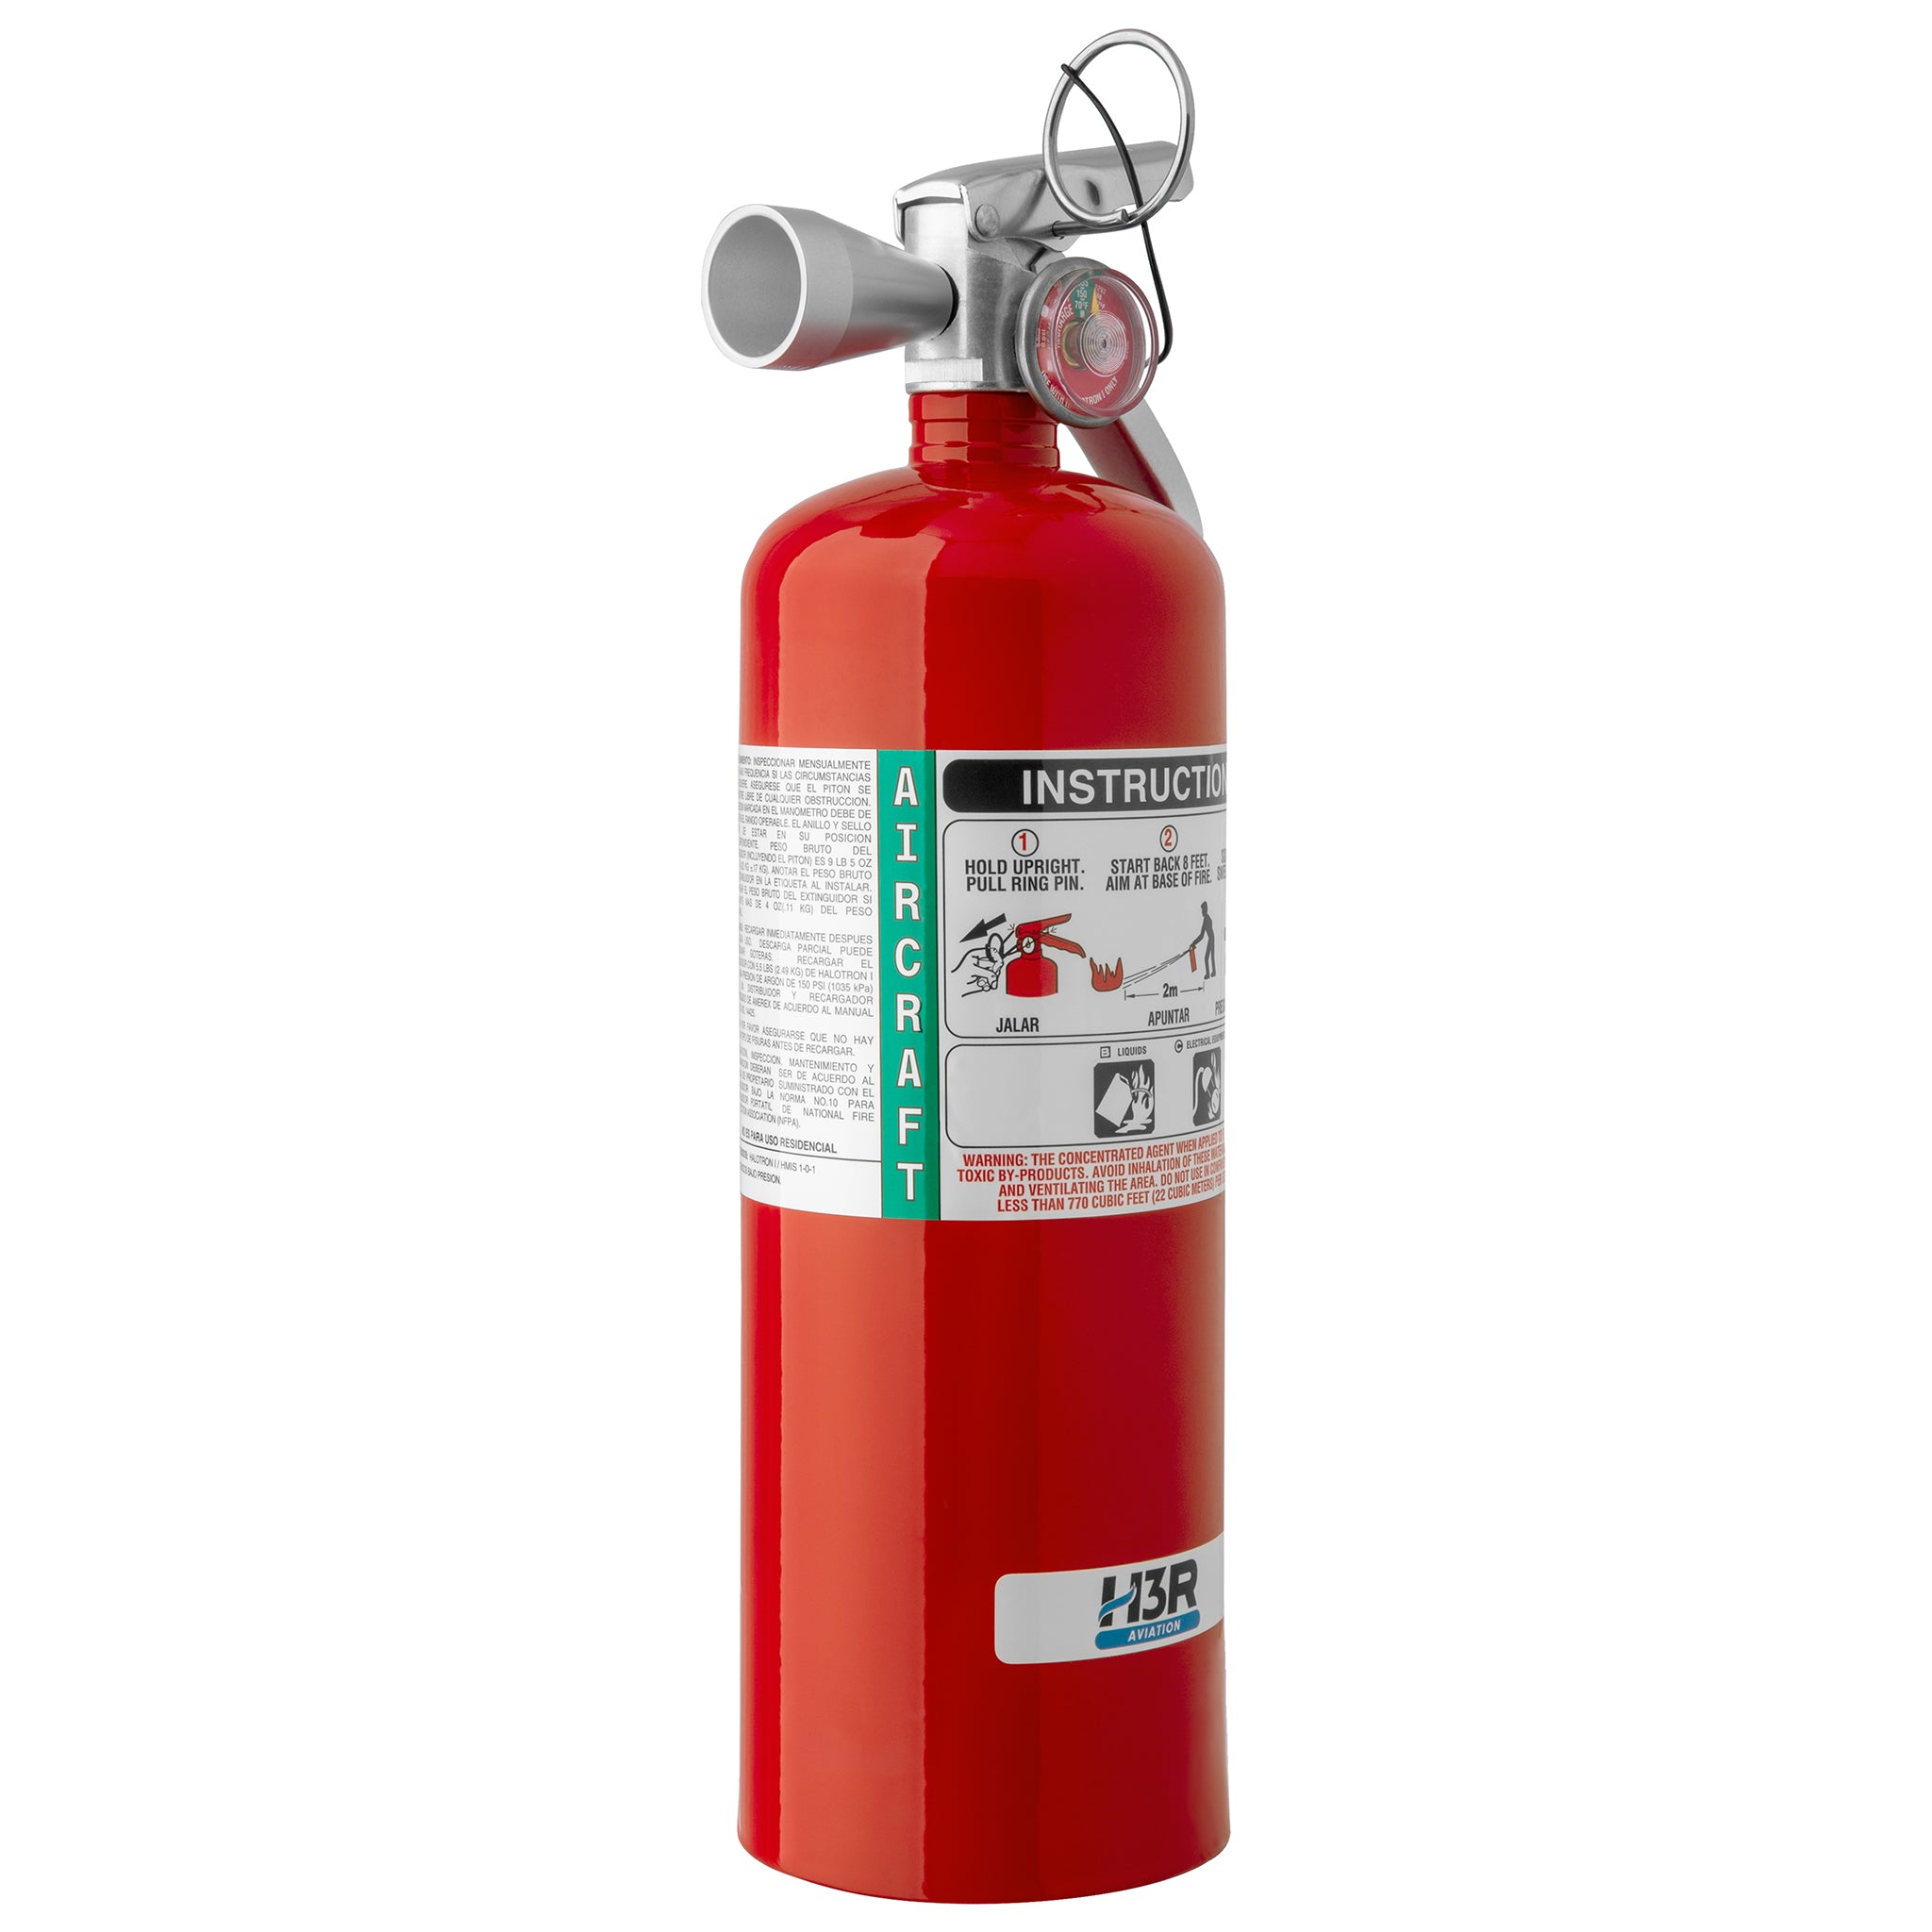 B394TS - 5.5 lb. Halotron 1 Fire Extinguisher